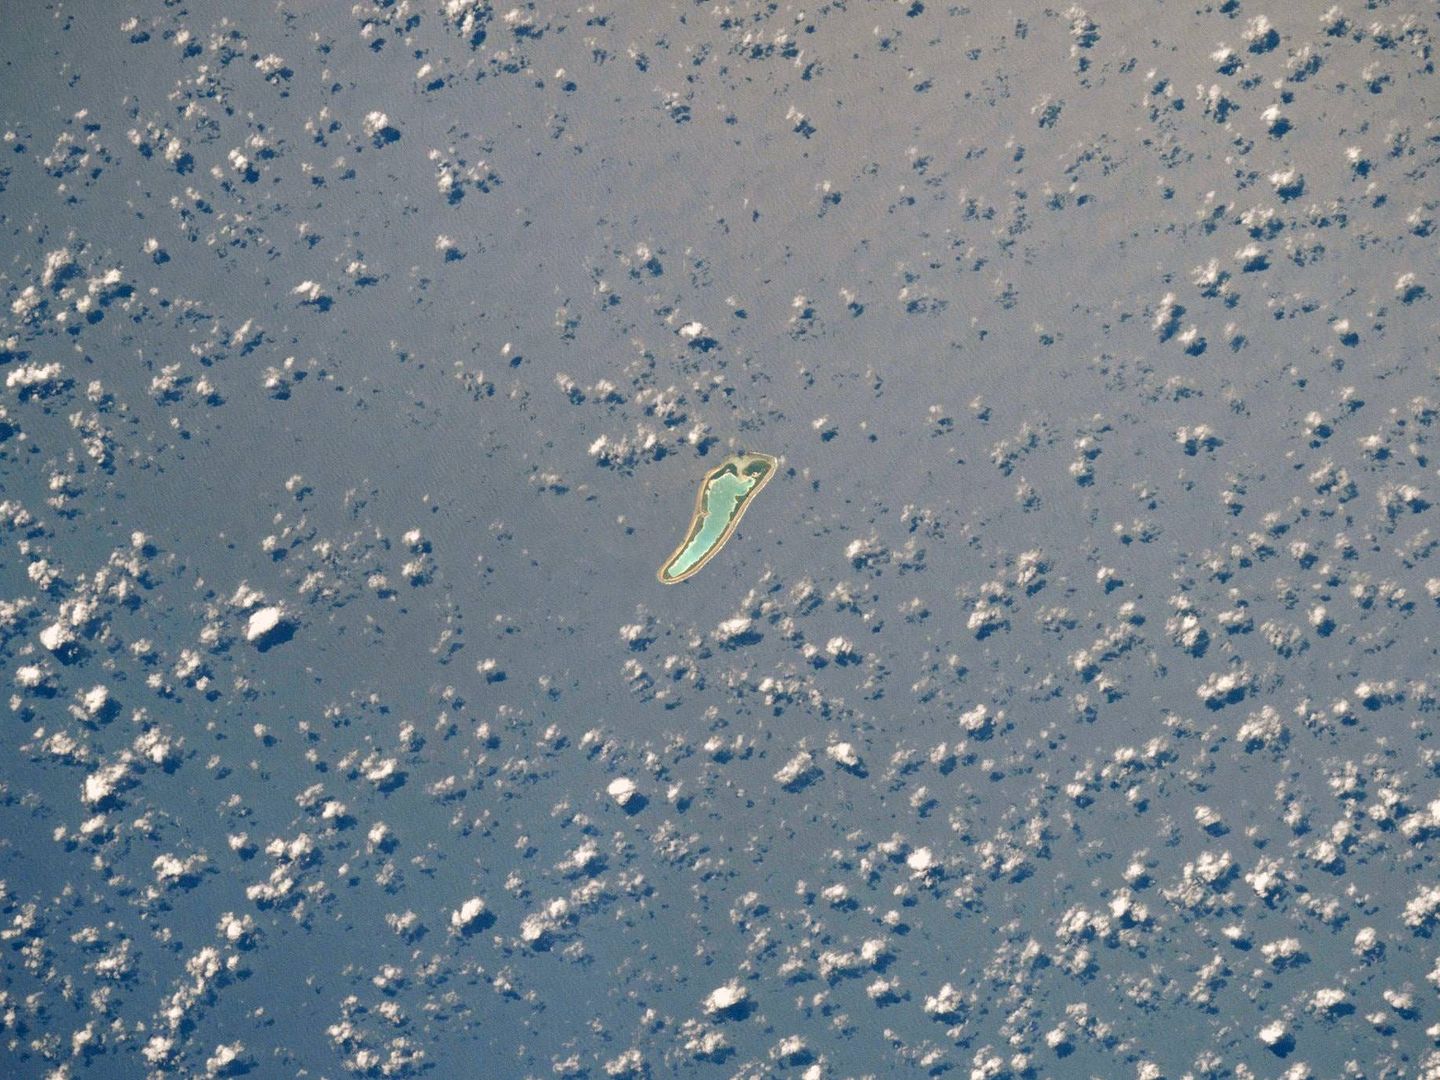 Imagen por satélite del atolón Nikkumaroro. Mide unos 6 kilómetros cuadrados. (Foto: NASA)